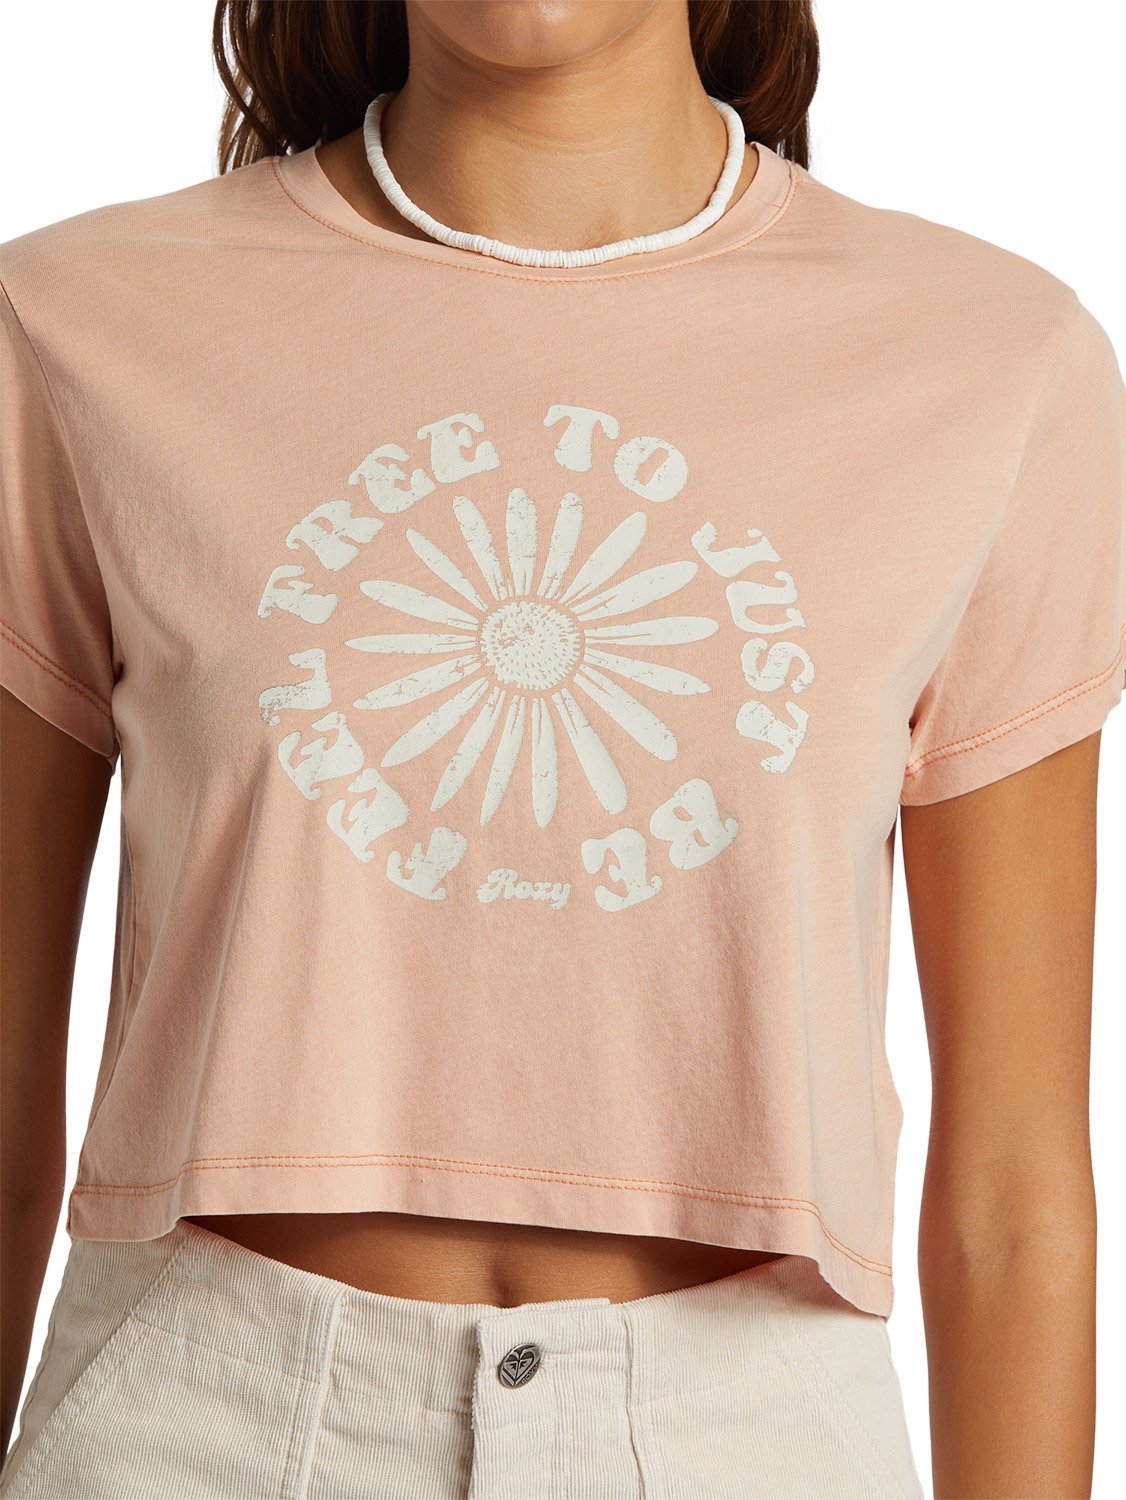 Roxy Ladies Feel Free Tank T-Shirt